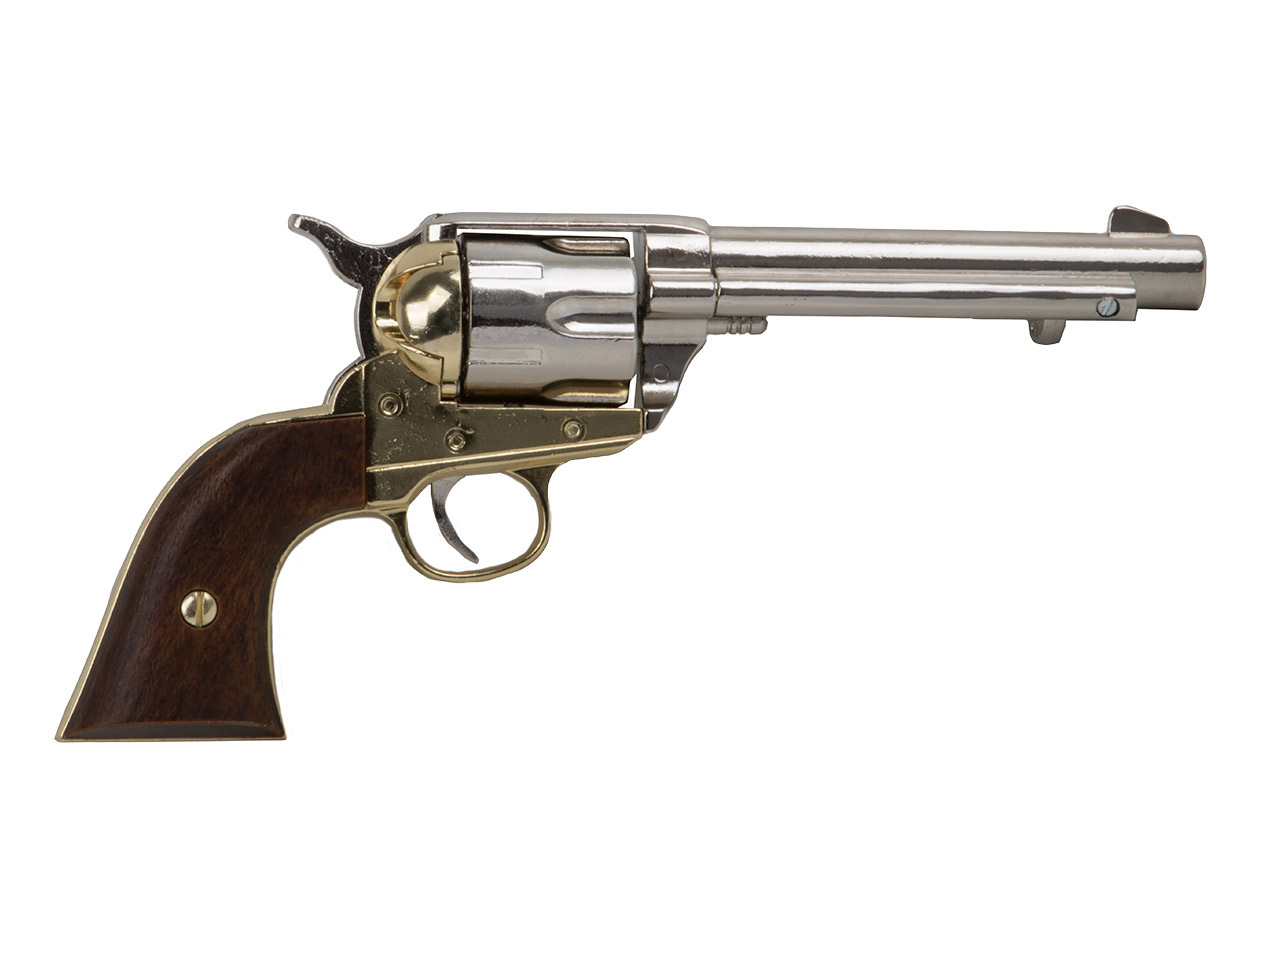 <b>Set 4</b> Western Revolvergurt rechts 90 cm 1 Holster hellbraun und Deko Revolver Kolser Colt SAA .45 Peacemaker 5,5 Zoll nickel gold